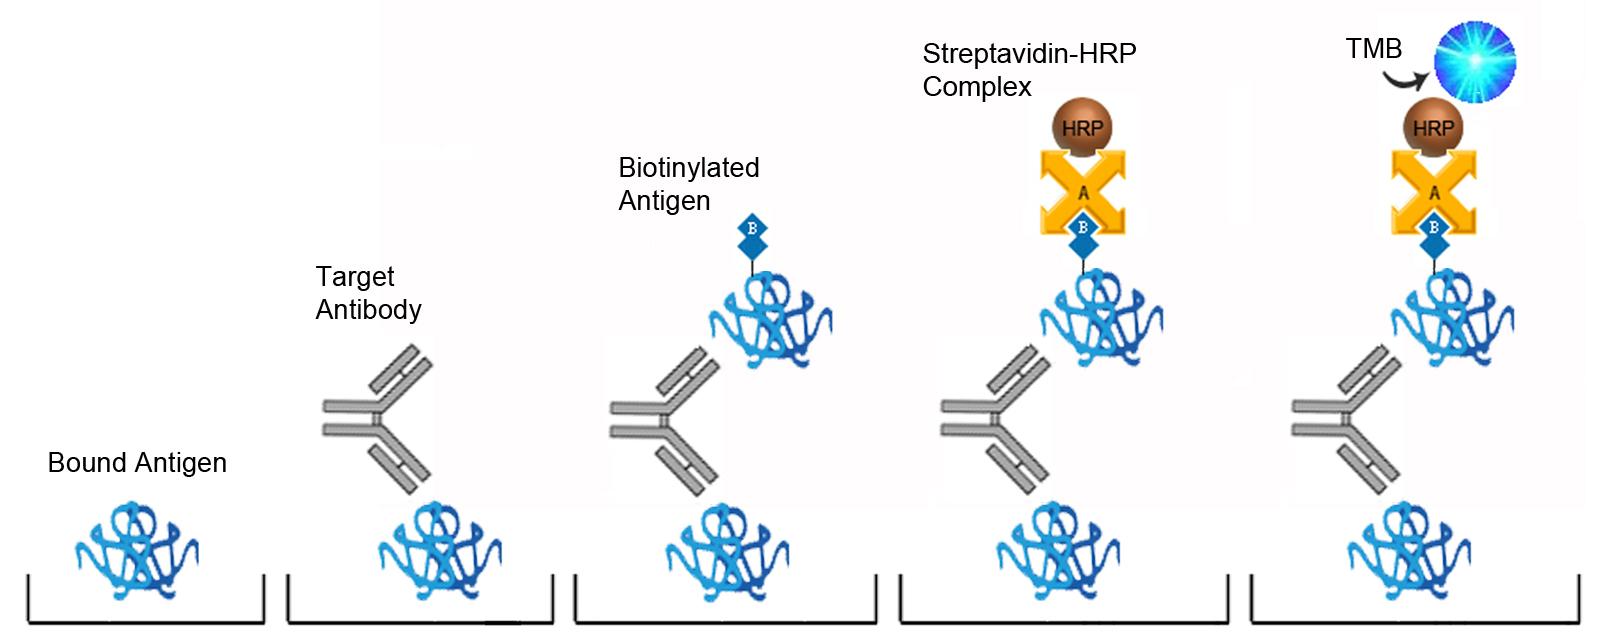 Anti-Ox LDL Antibody ELISA Kit - Sandwich BoundAntigen SampleAb AntigenBiotin AvidHRP TMB